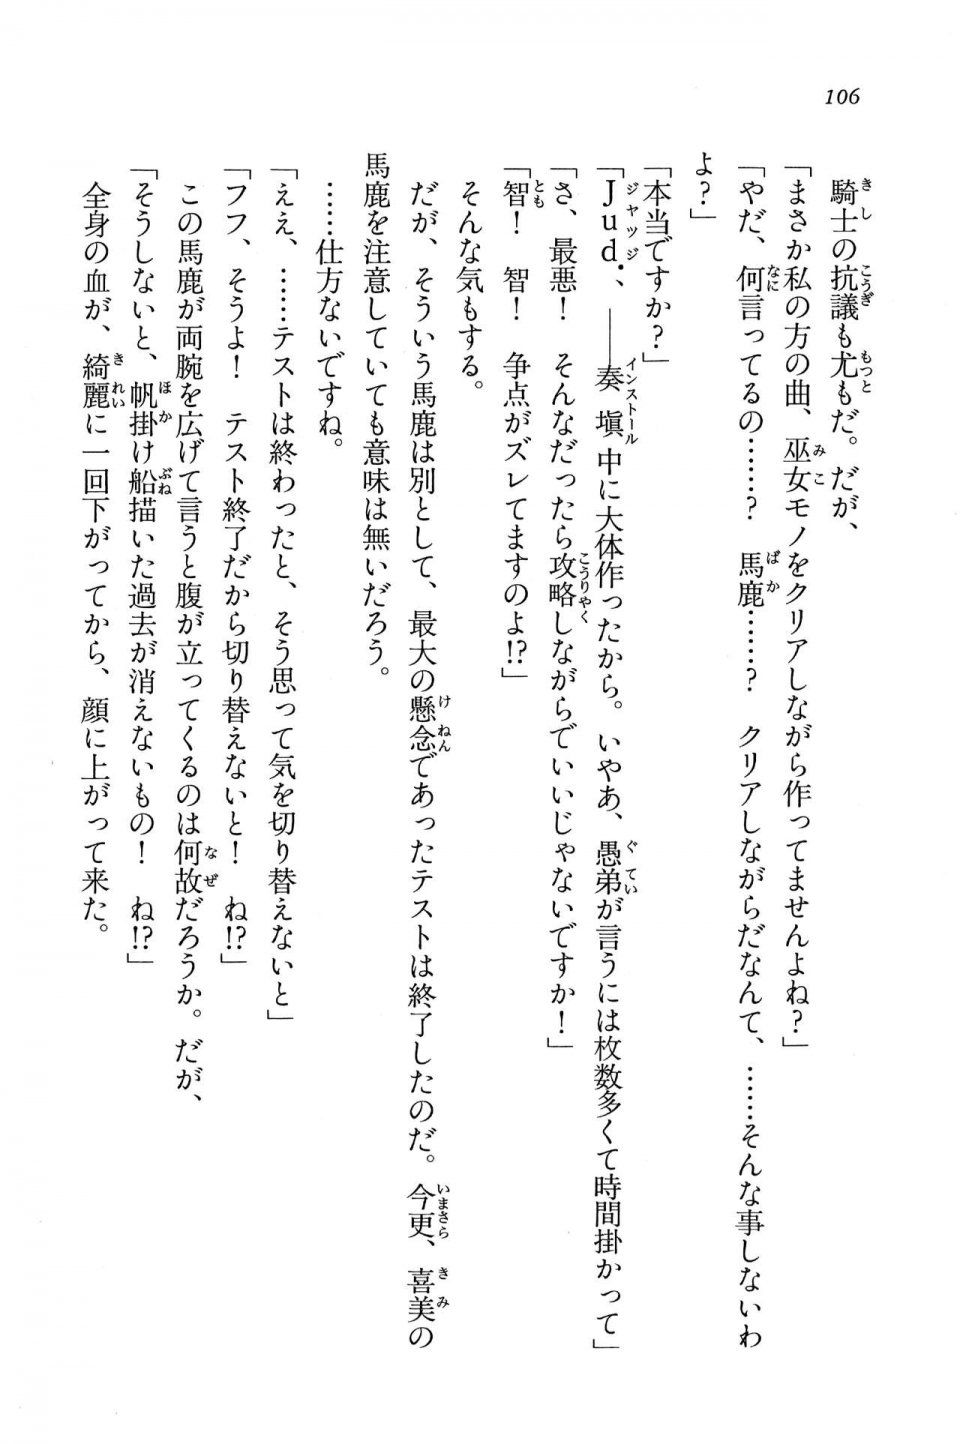 Kyoukai Senjou no Horizon BD Special Mininovel Vol 7(4A) - Photo #110